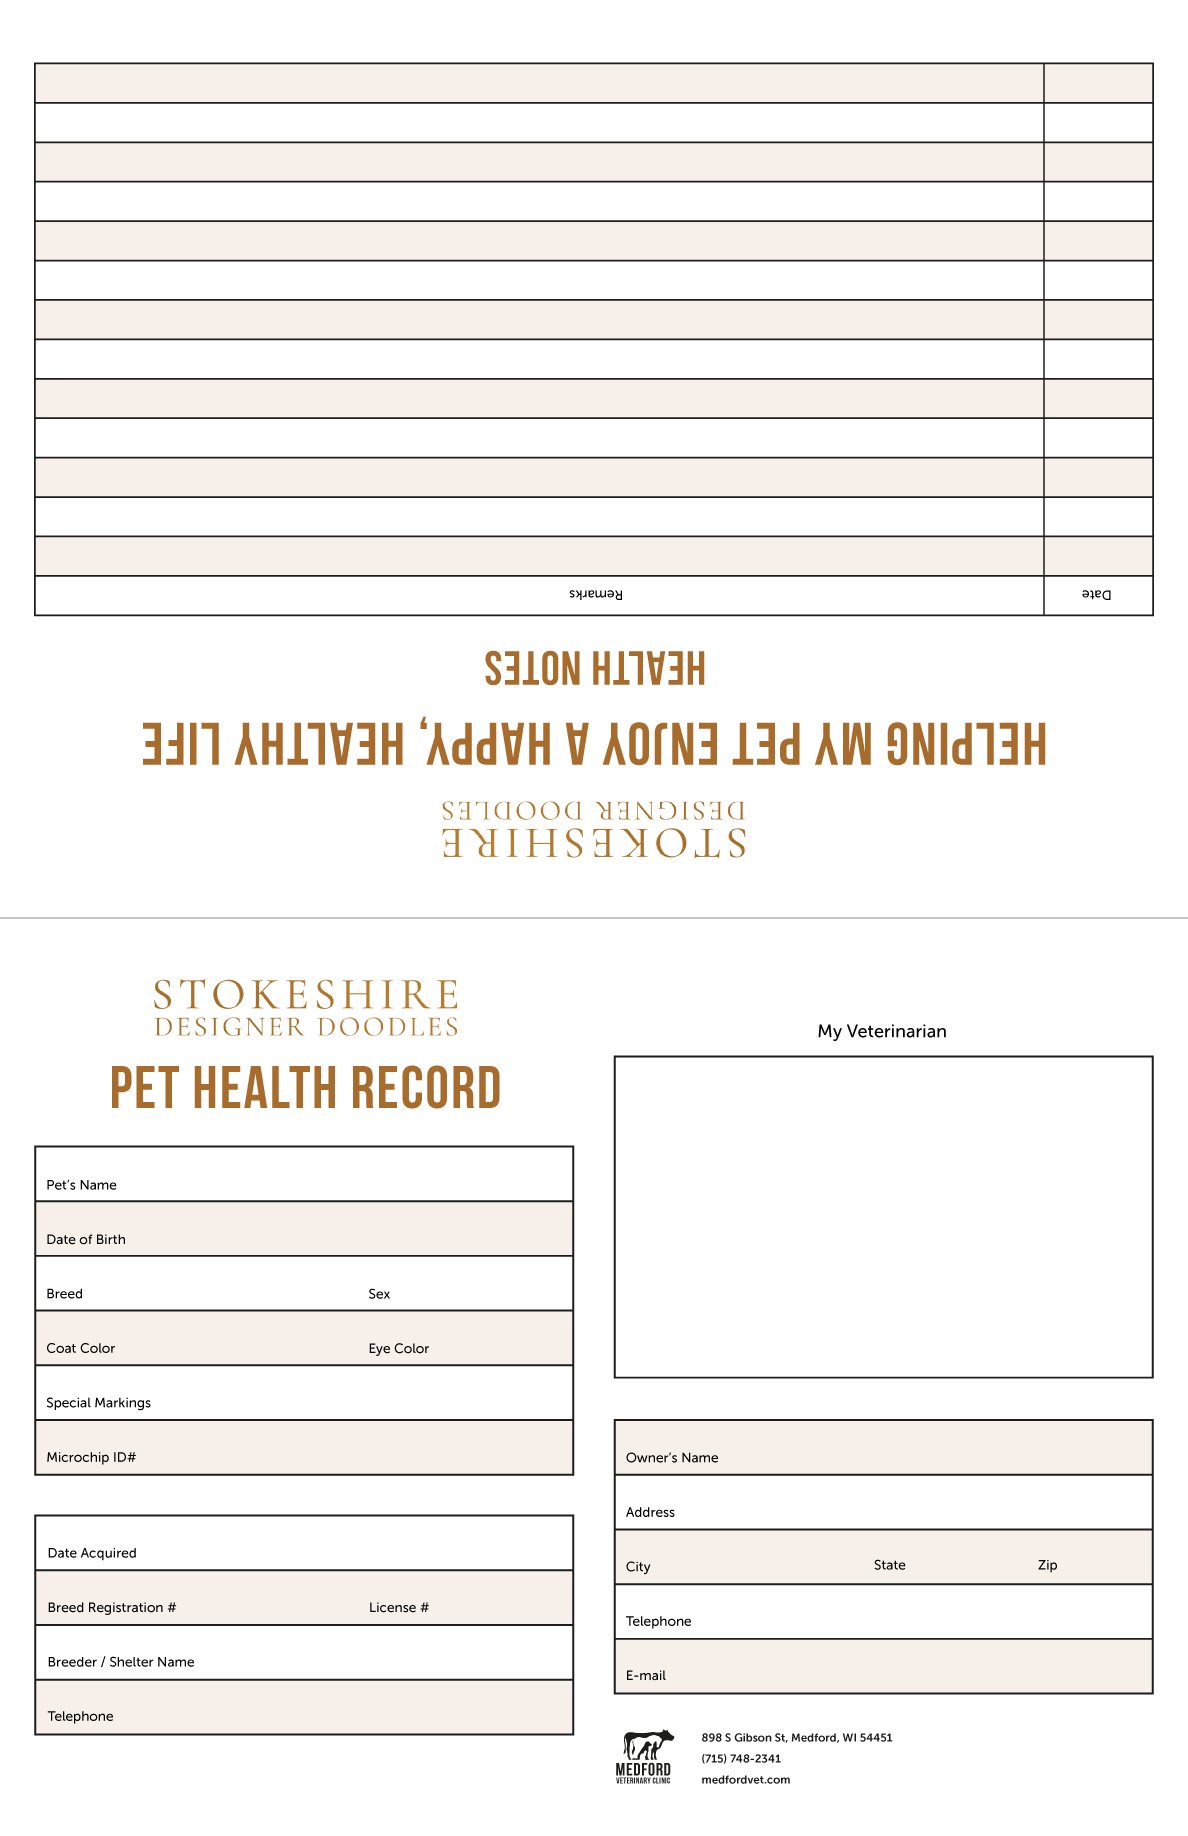 Stokeshire-Pet-Health-Record-#1.jpeg